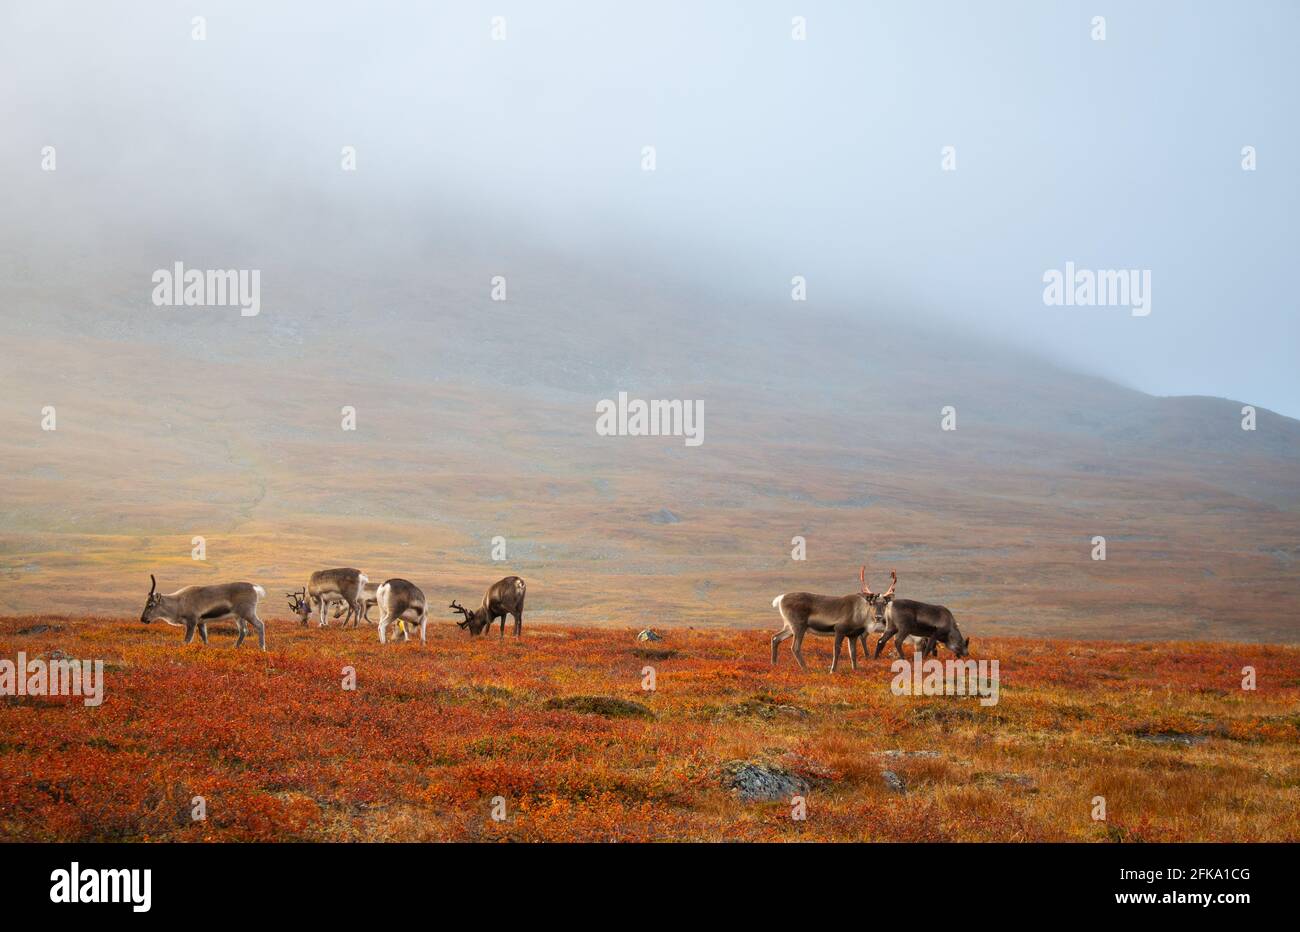 Reindeers met while hiking Kungsleden trail, September, Swedish Lapland. Stock Photo